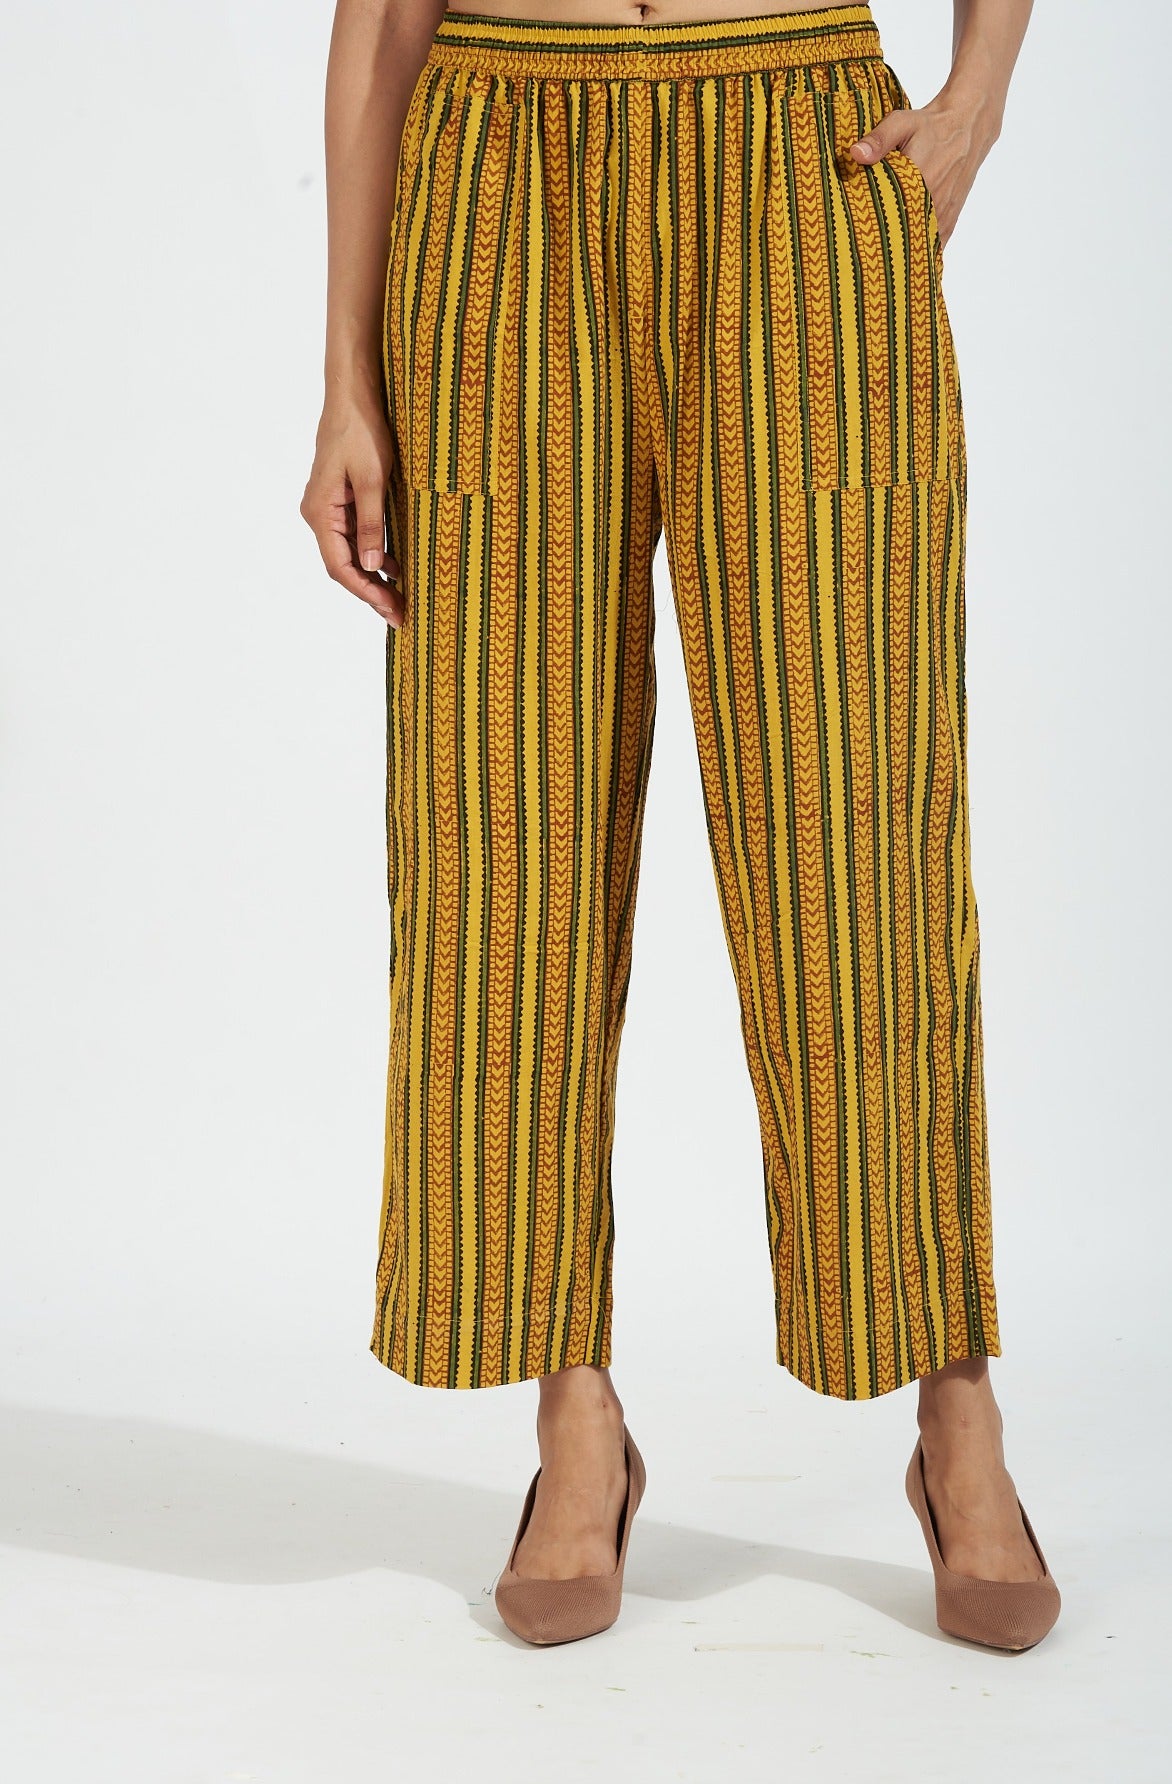 comfort fit cotton printed pants - yellow green ajrakh stripes